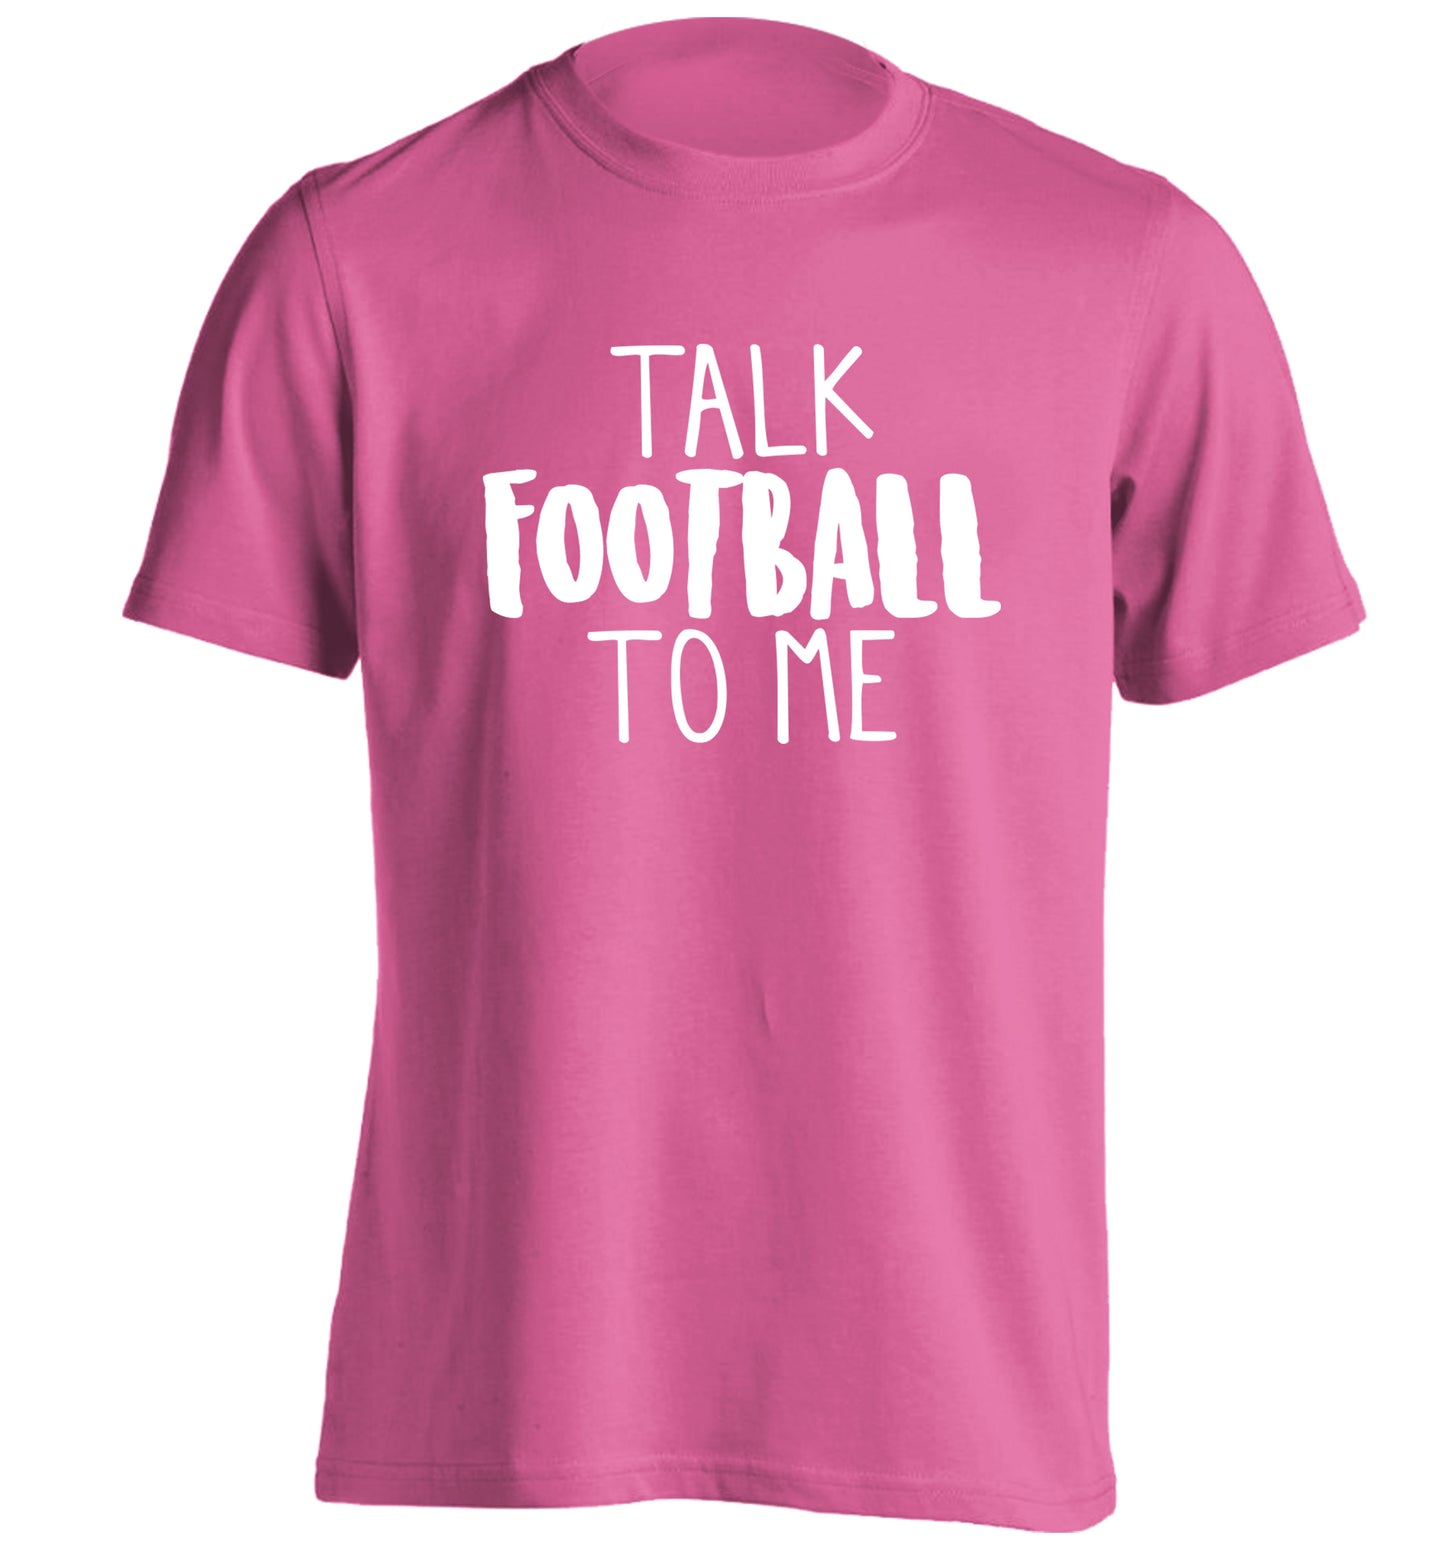 Talk football to me adults unisexpink Tshirt 2XL